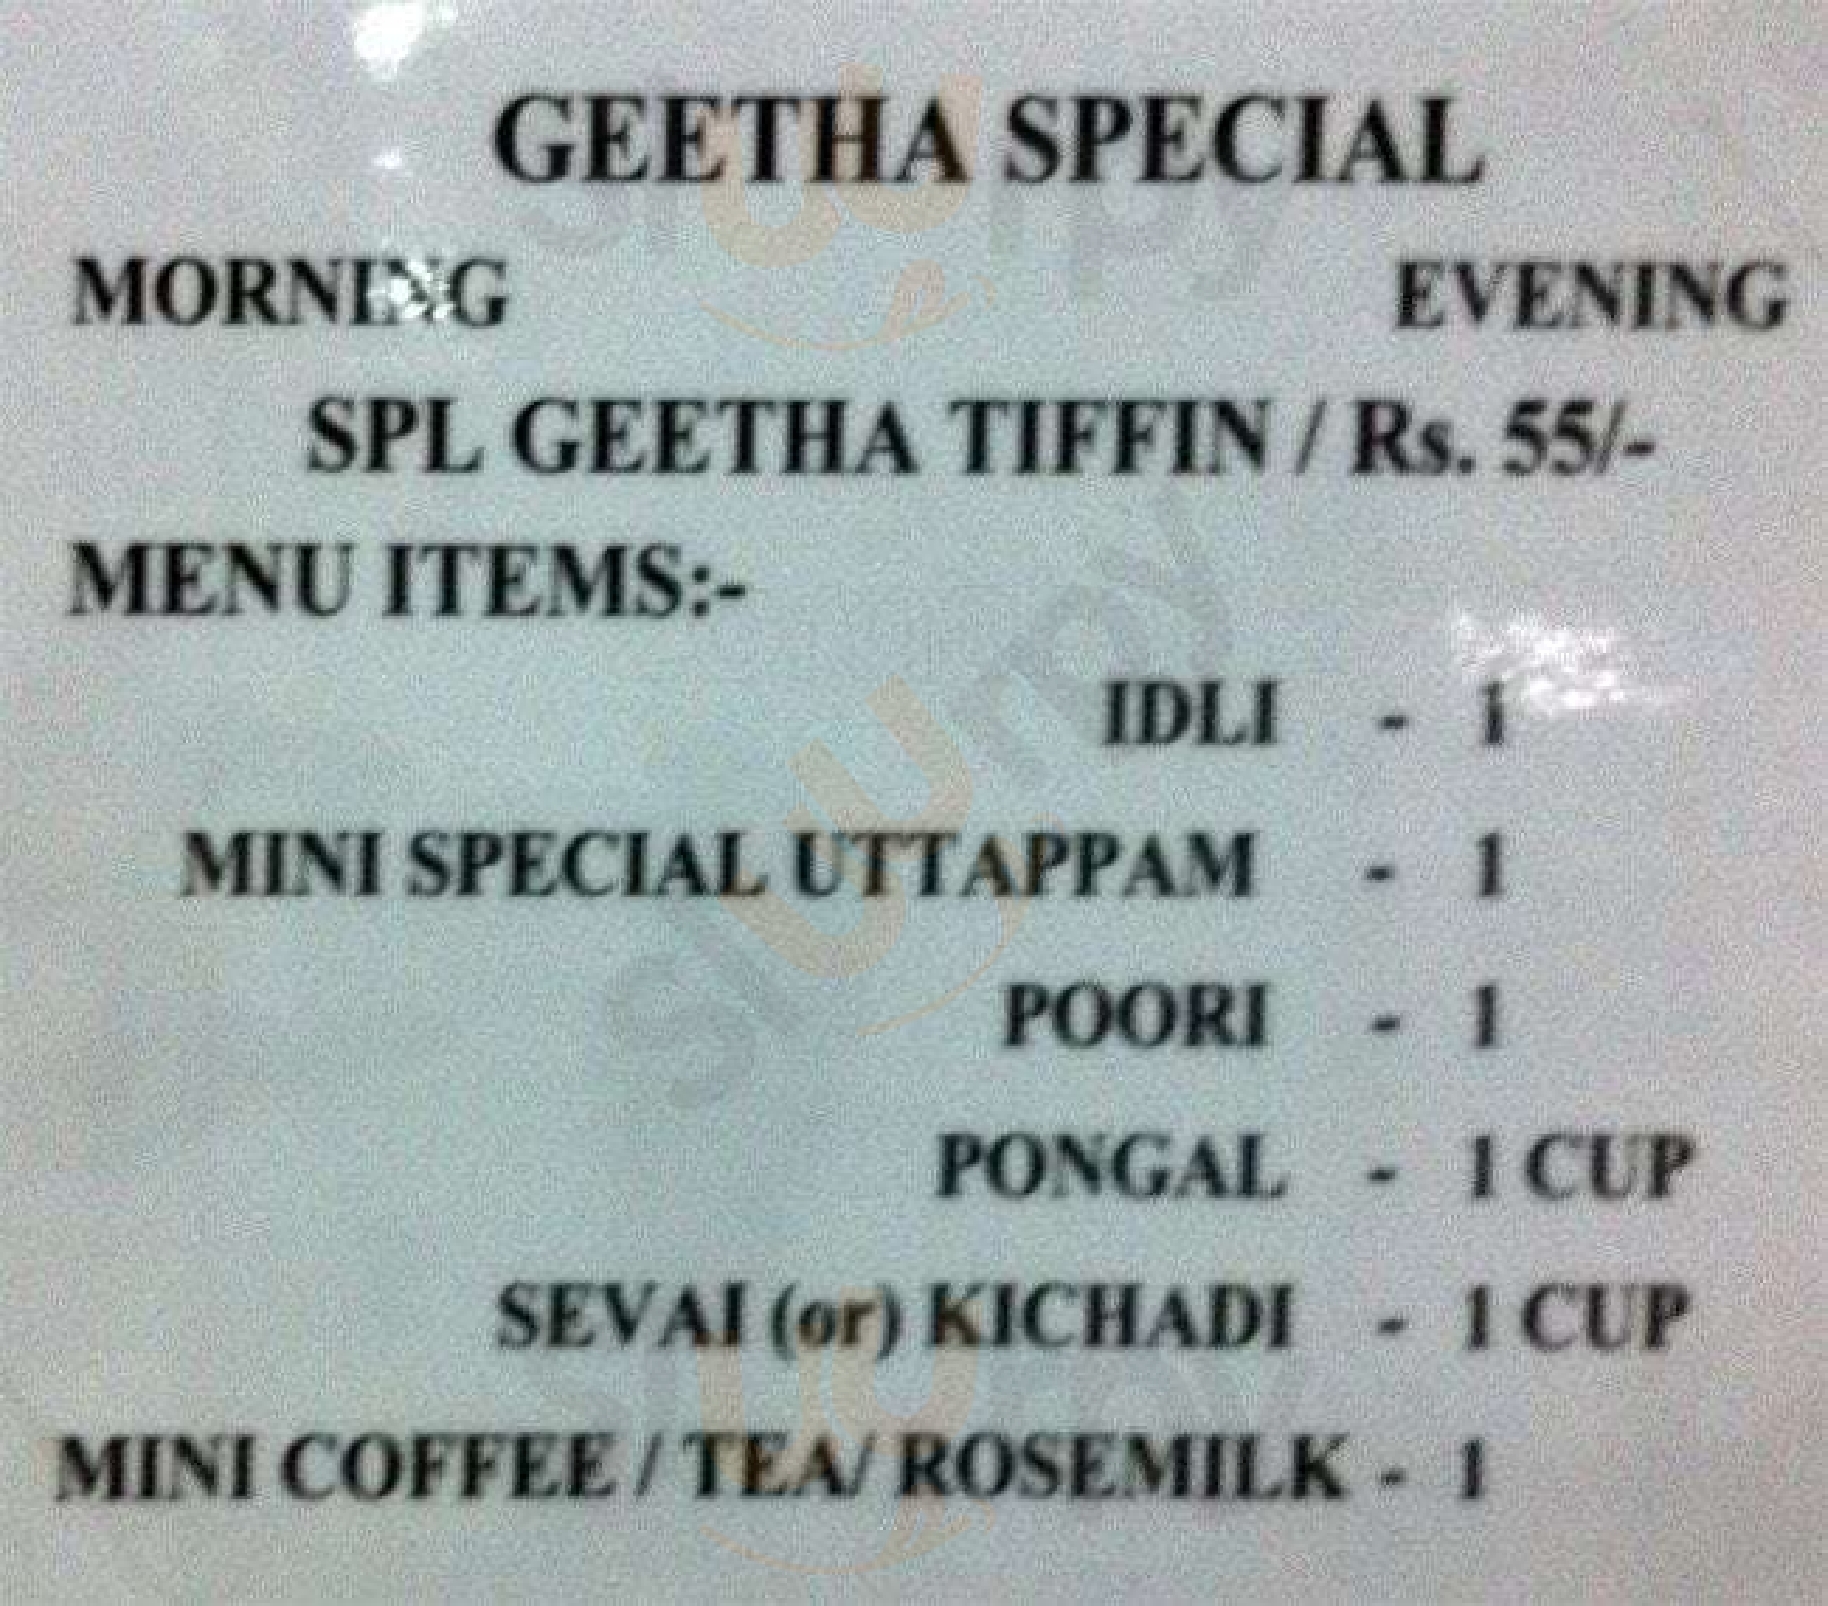 Geethas Restaurant Coimbatore Menu - 1